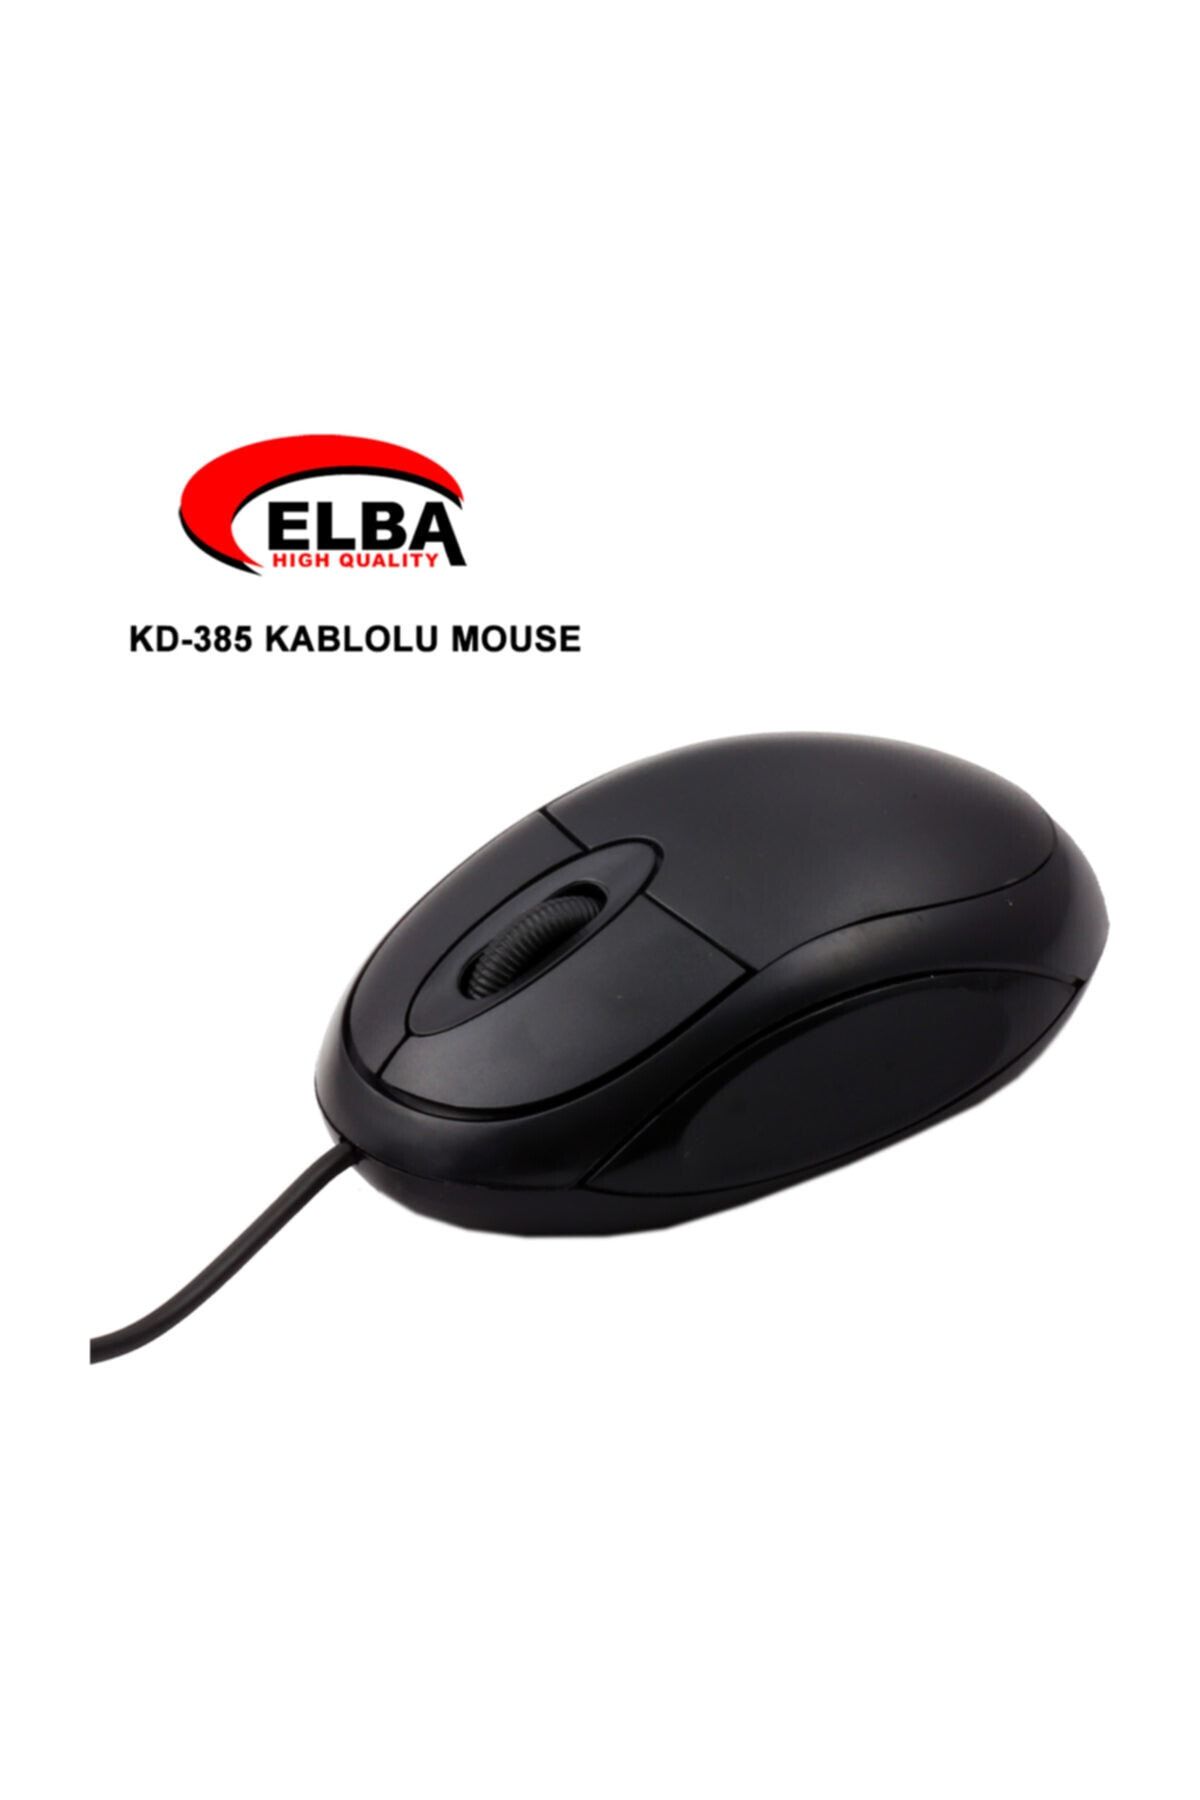 ELBA Kd-385 Siyah Usb Kablolu Optik Mouse 800 Dpı